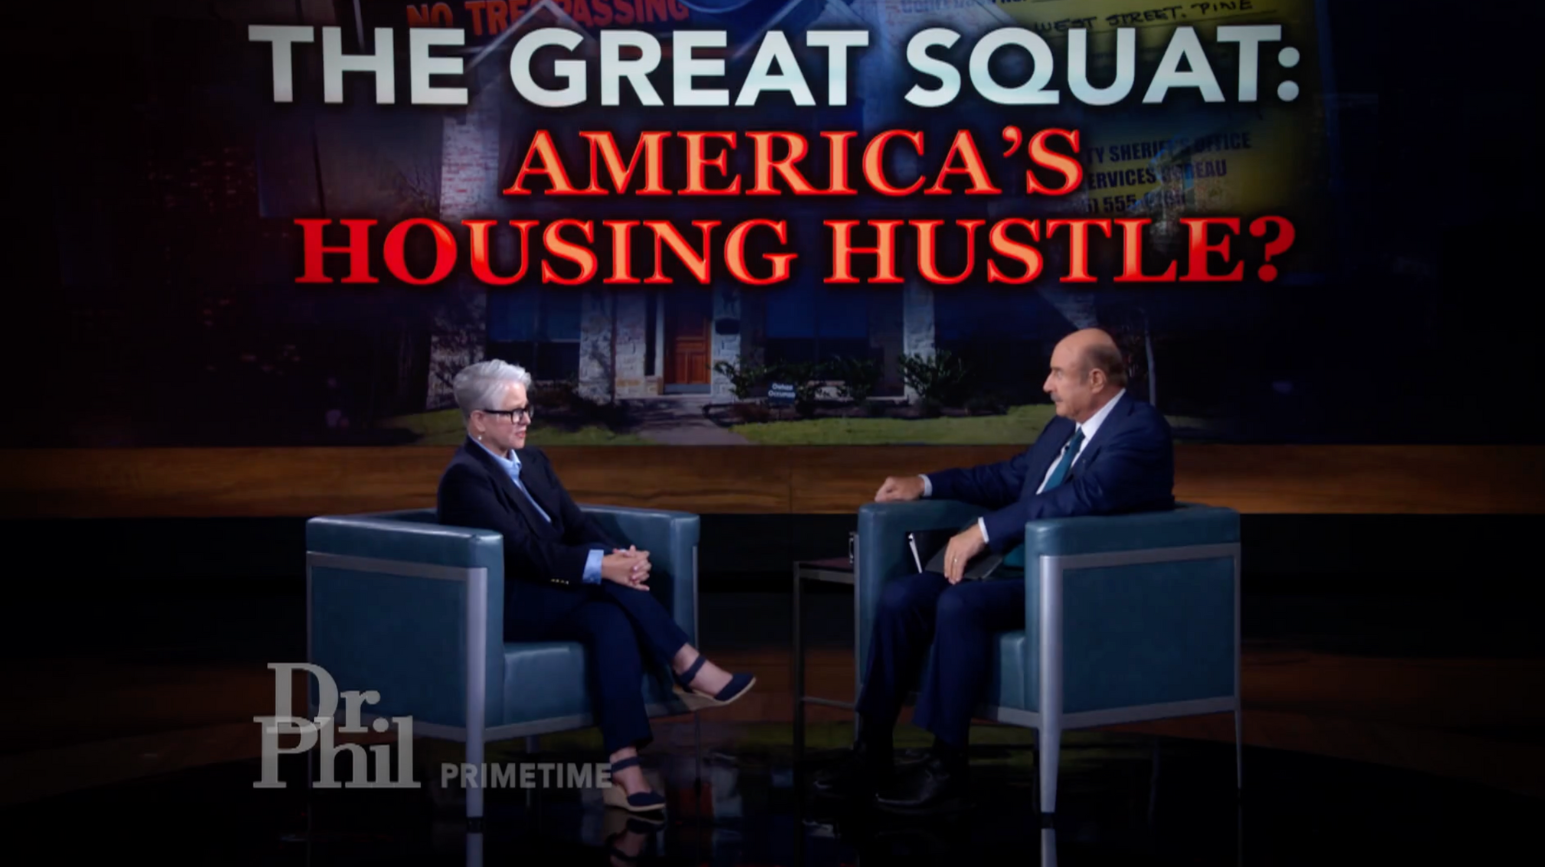 The Great Squat: America's Housing Hustle?